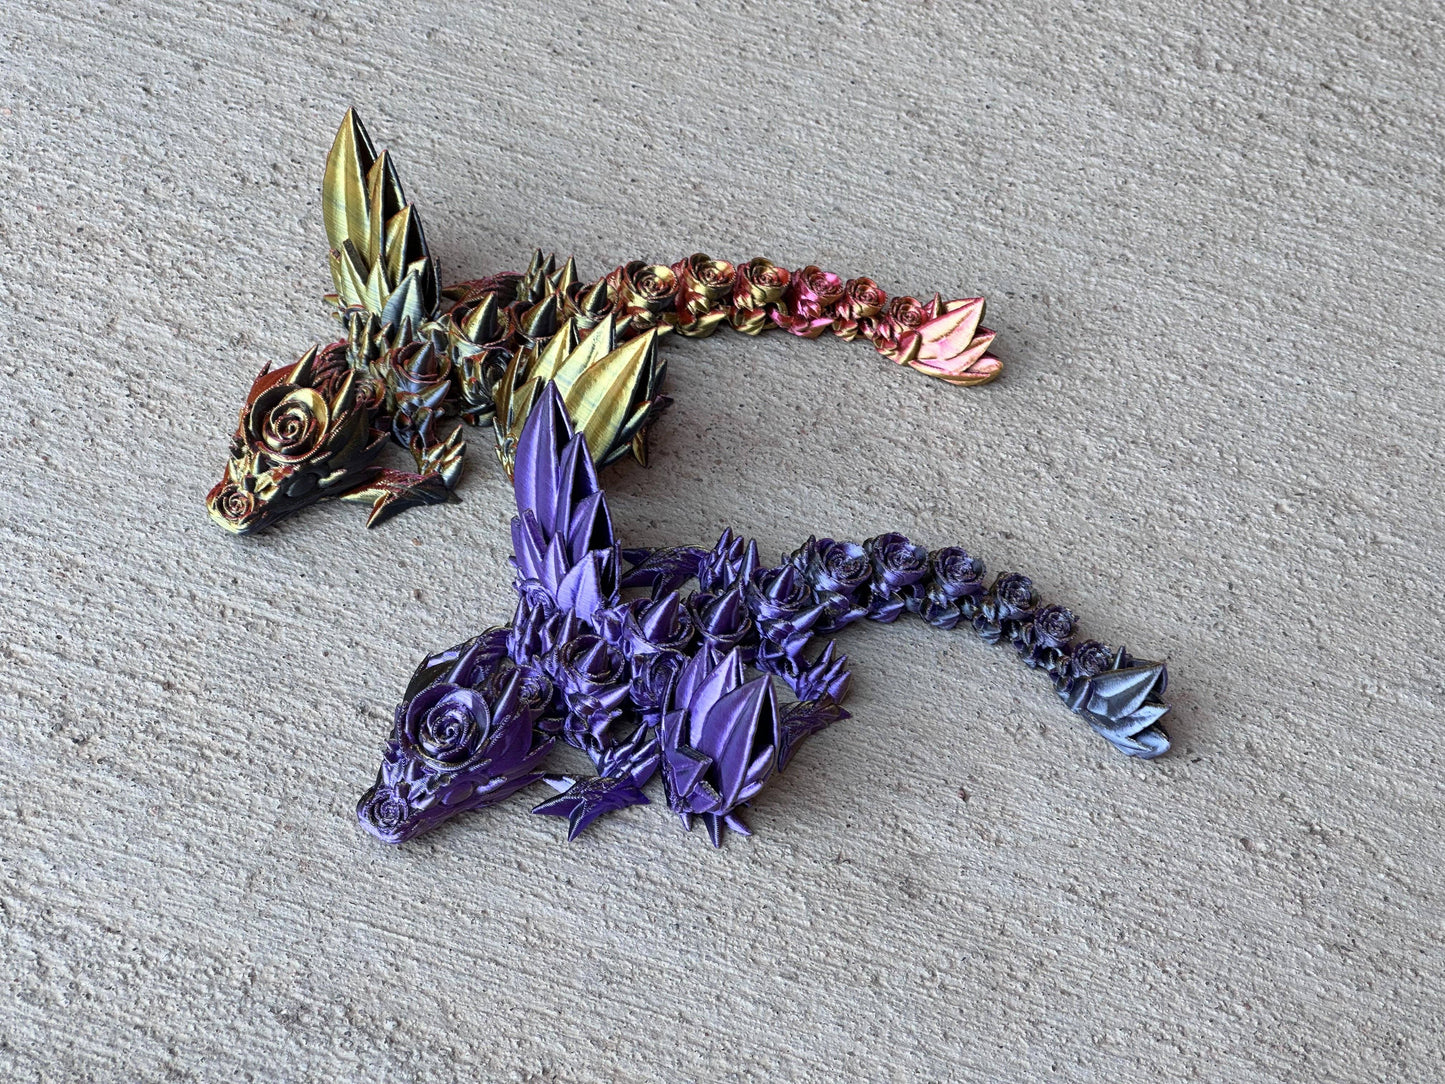 3D Printed Baby Rose Wing Dragon